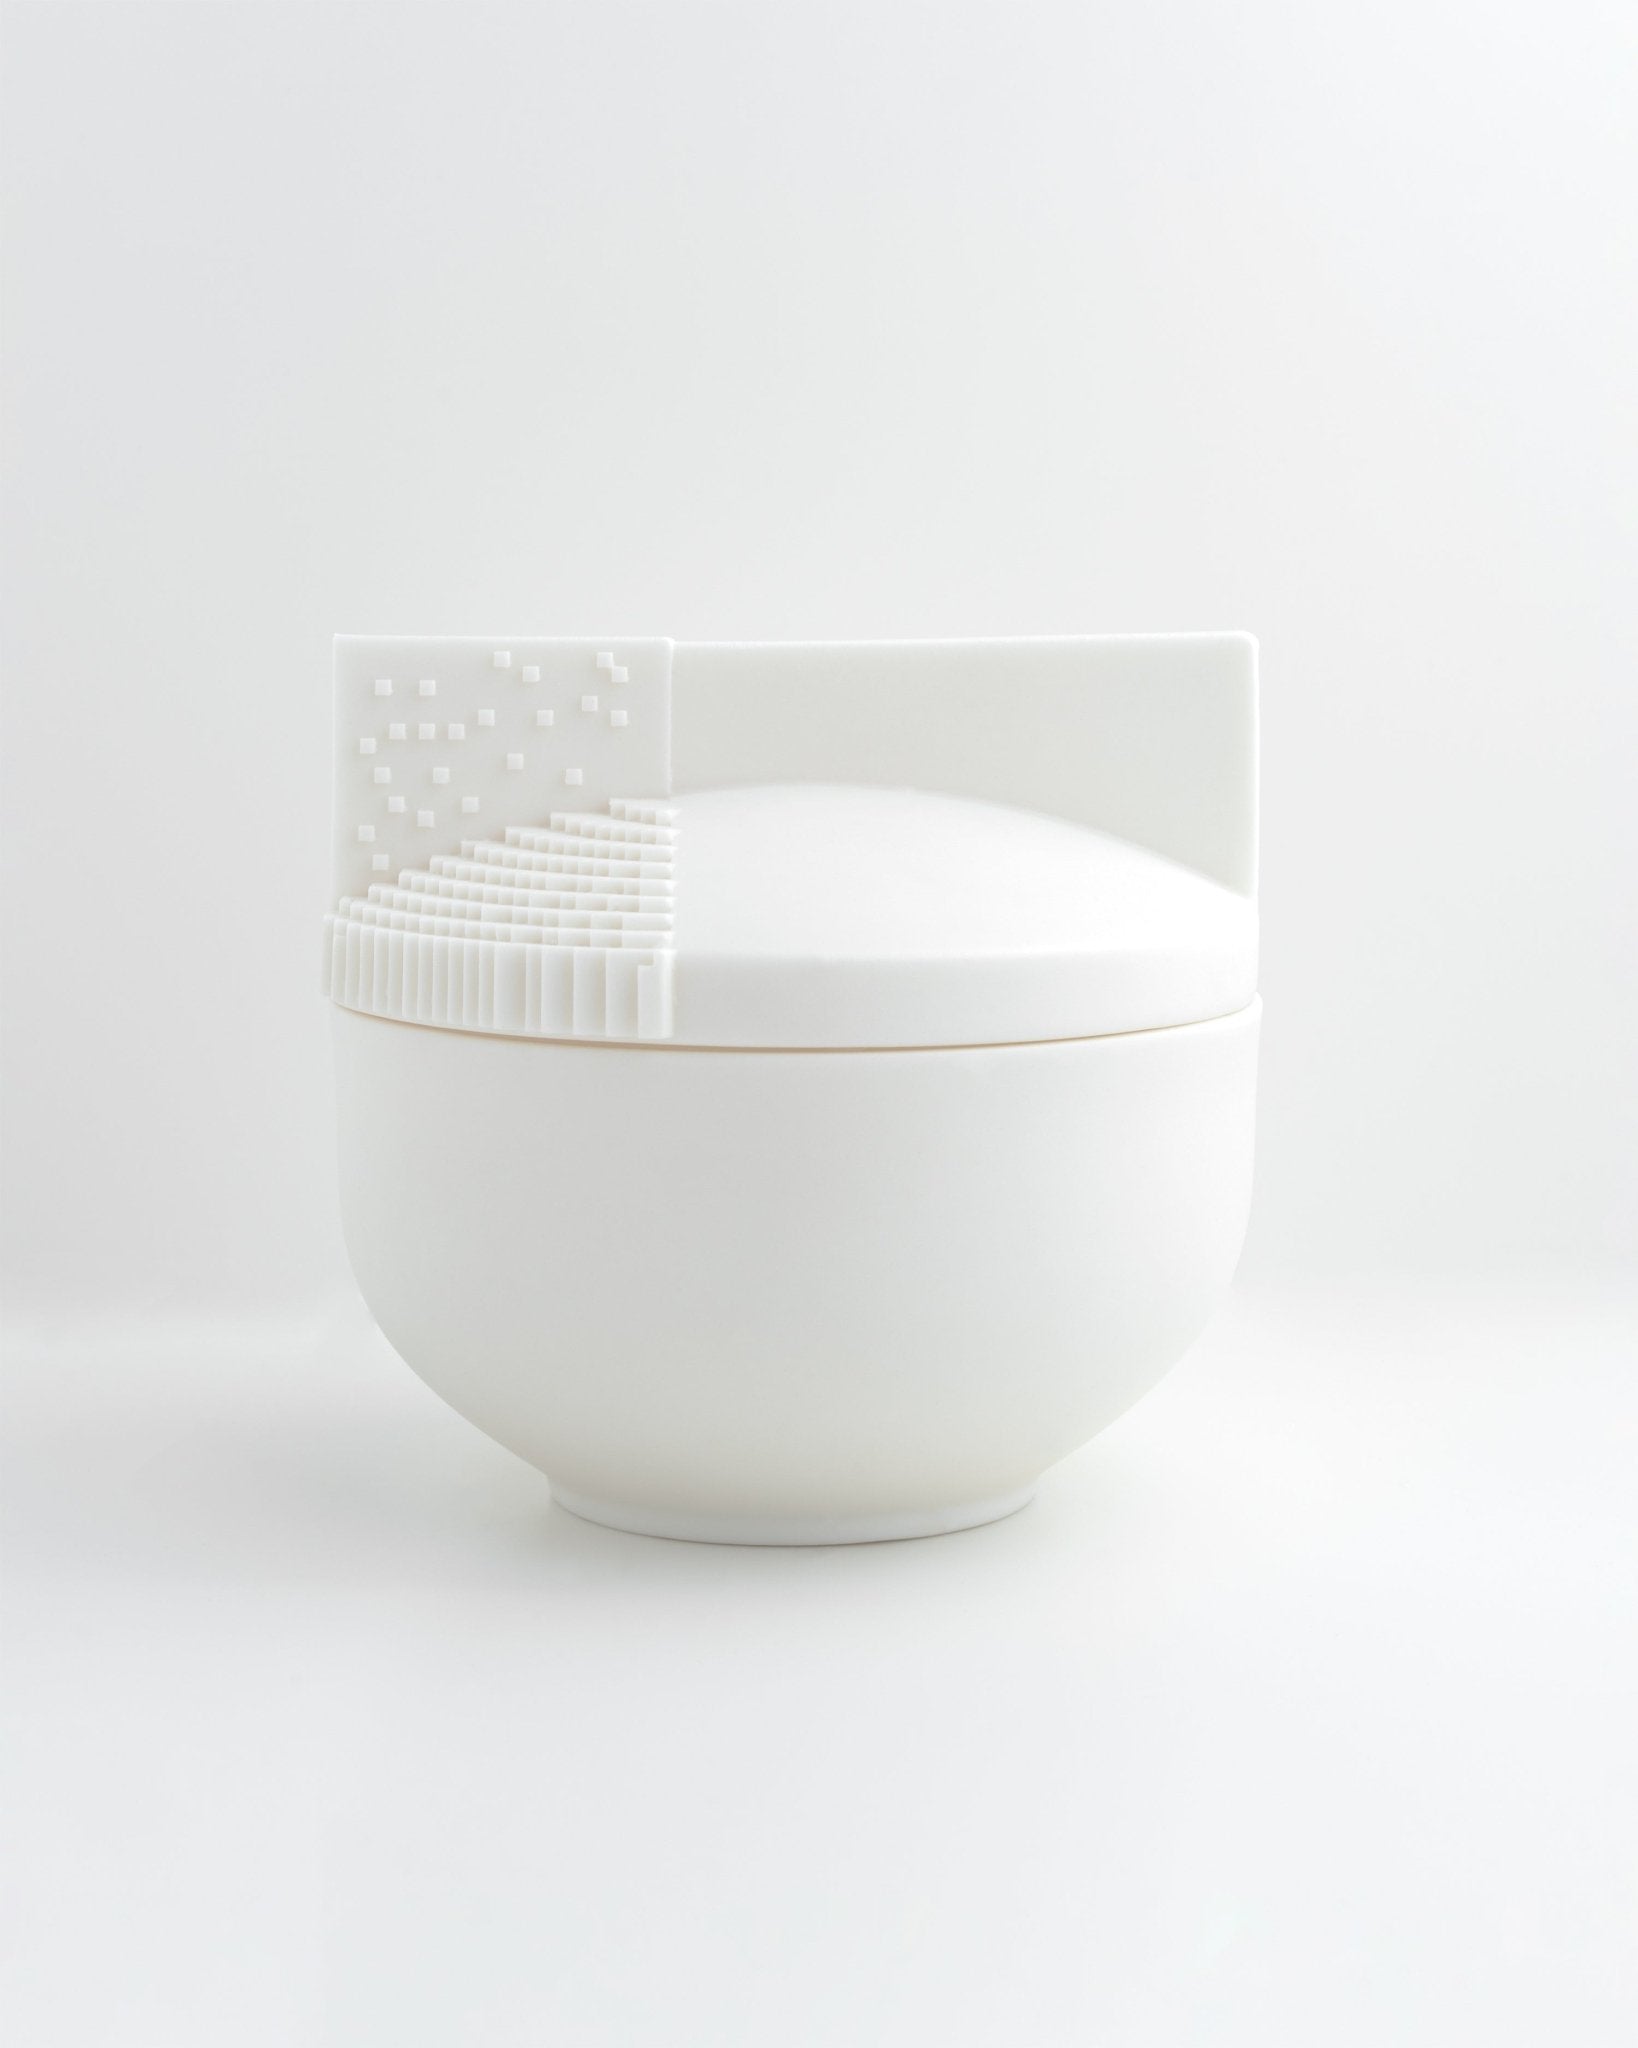 Basalt - pojemnik z porcelany Parian - Kyuka Design